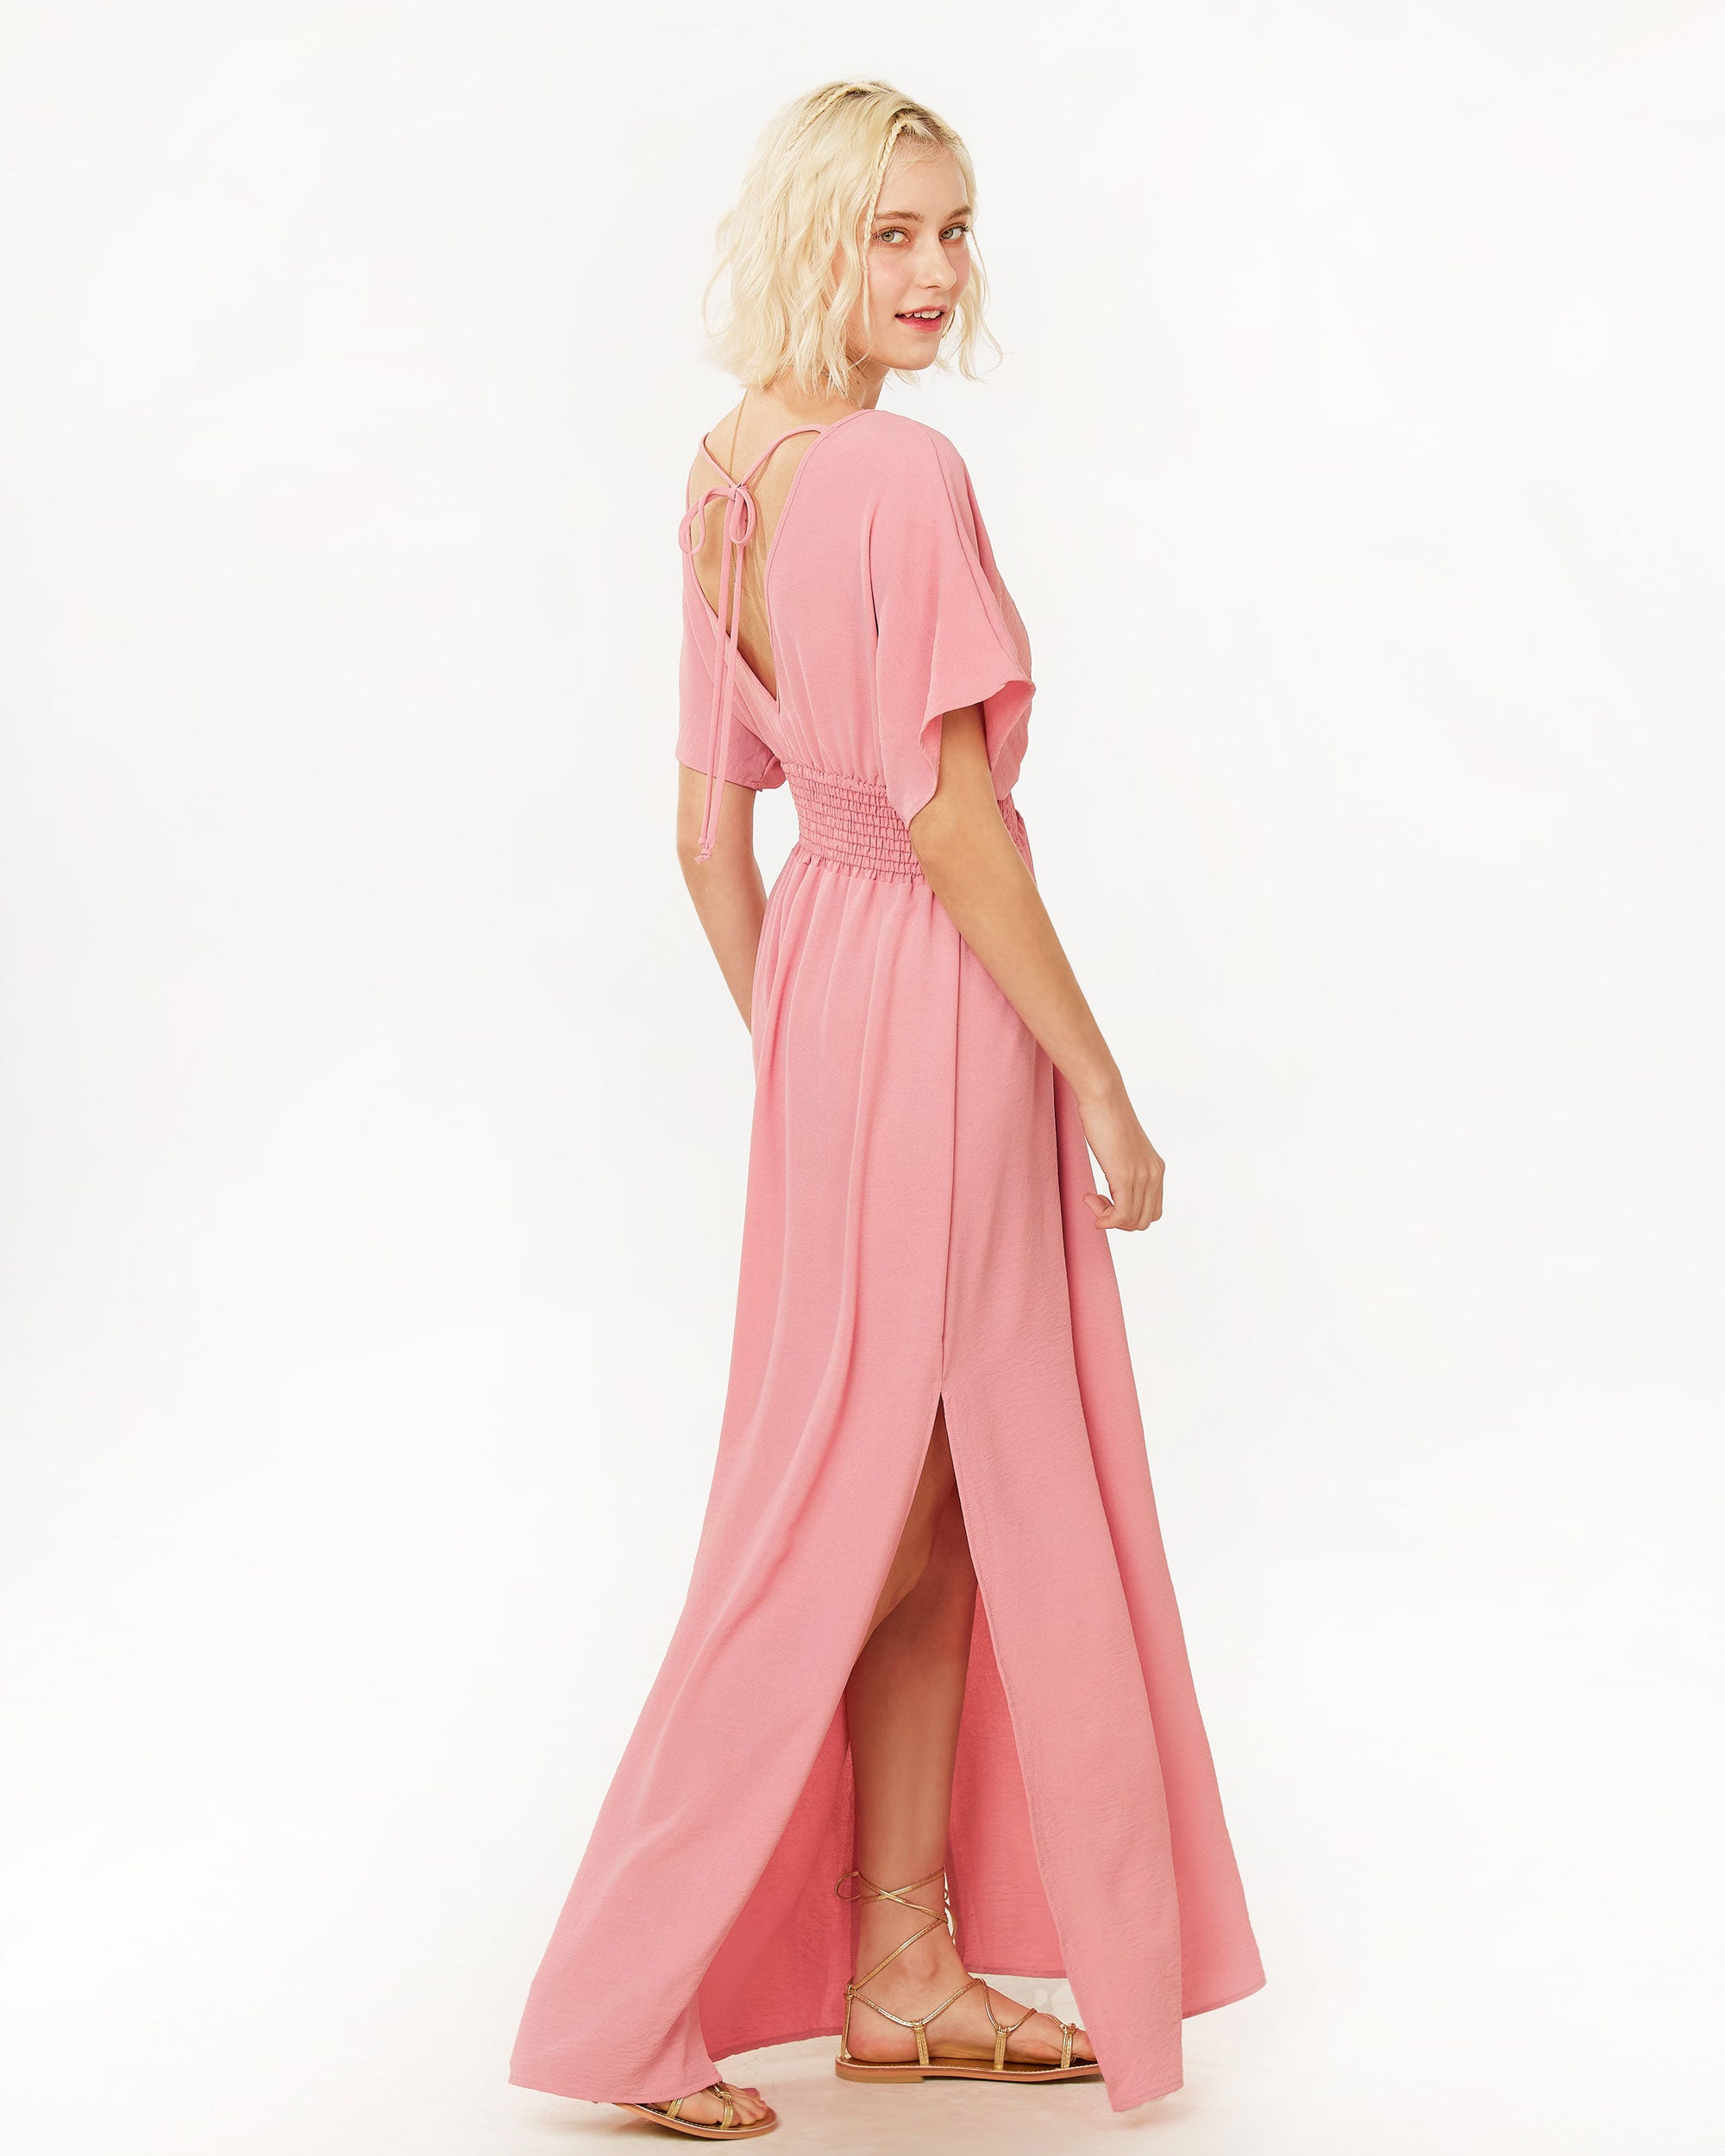 Dusty Rose Maxi Dress: Romantic Chic